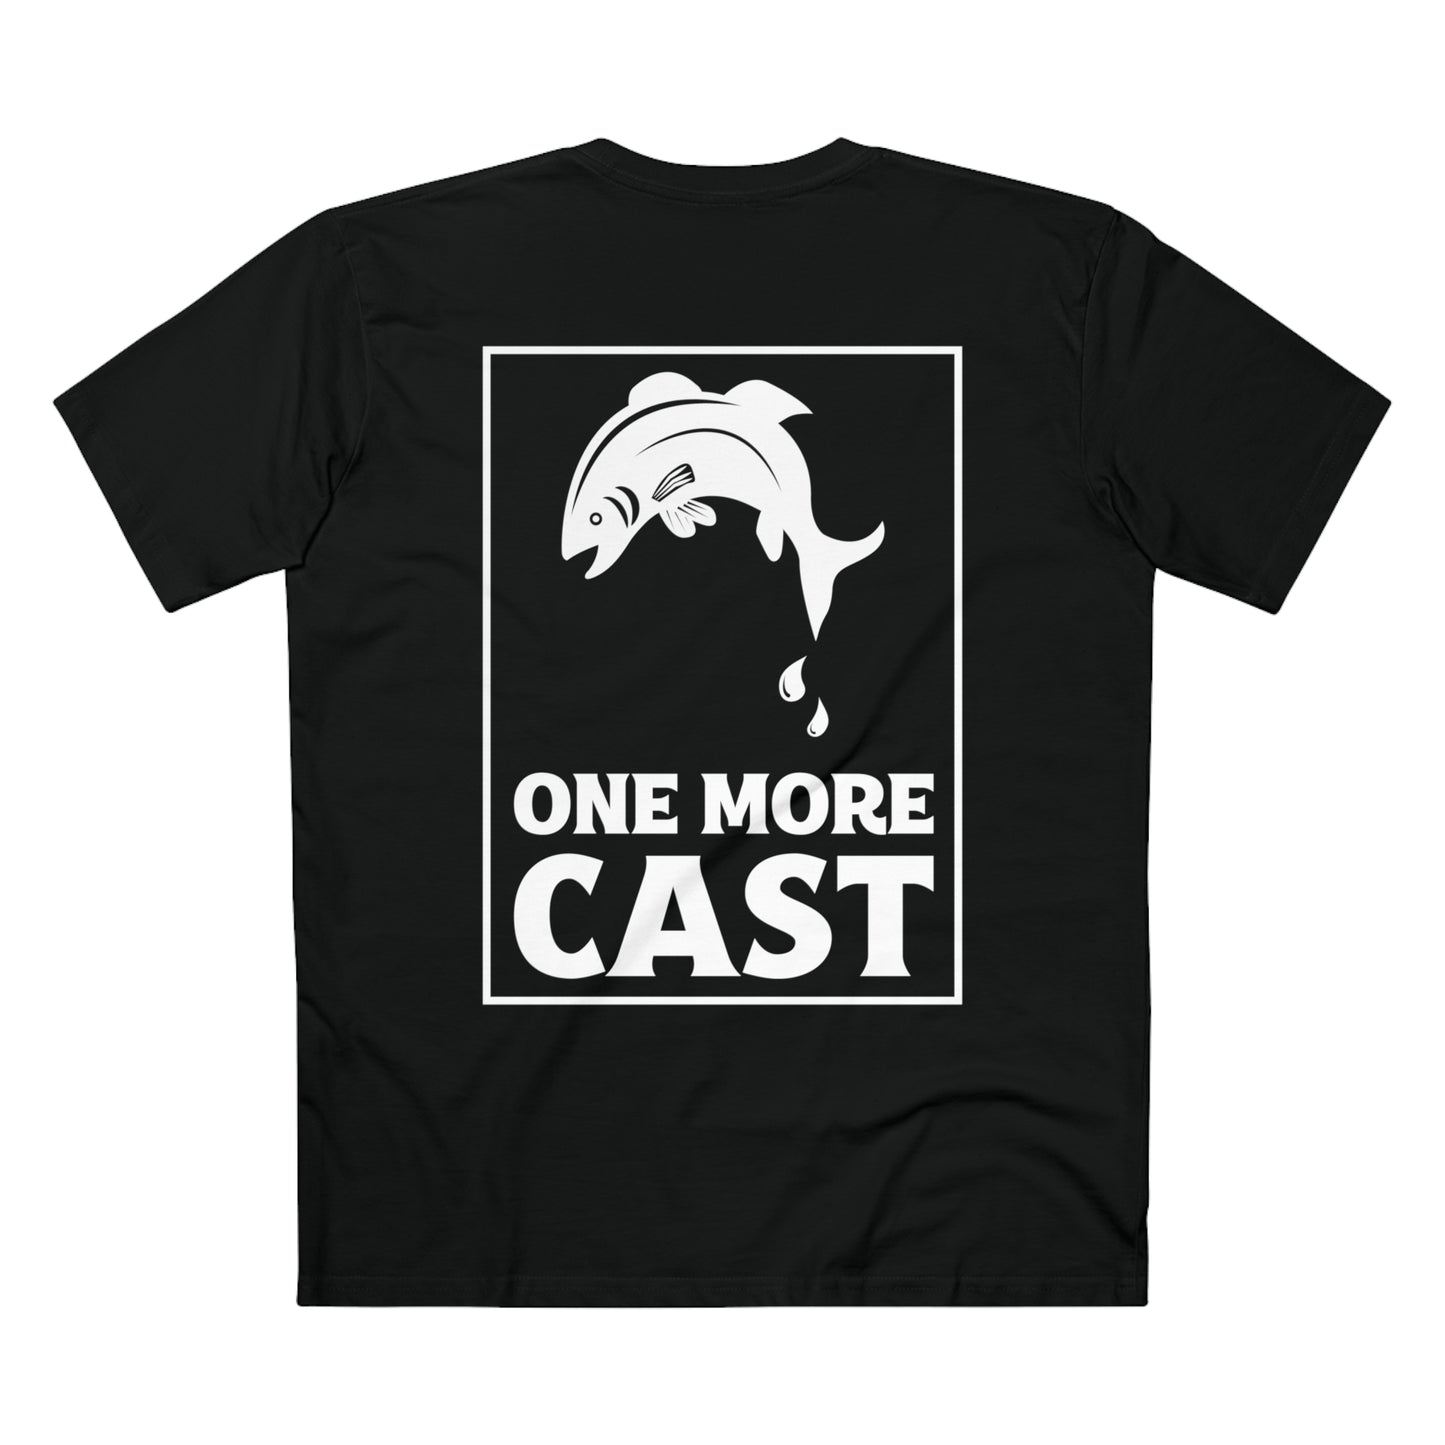 One more cast OG T-shirt (front and back)